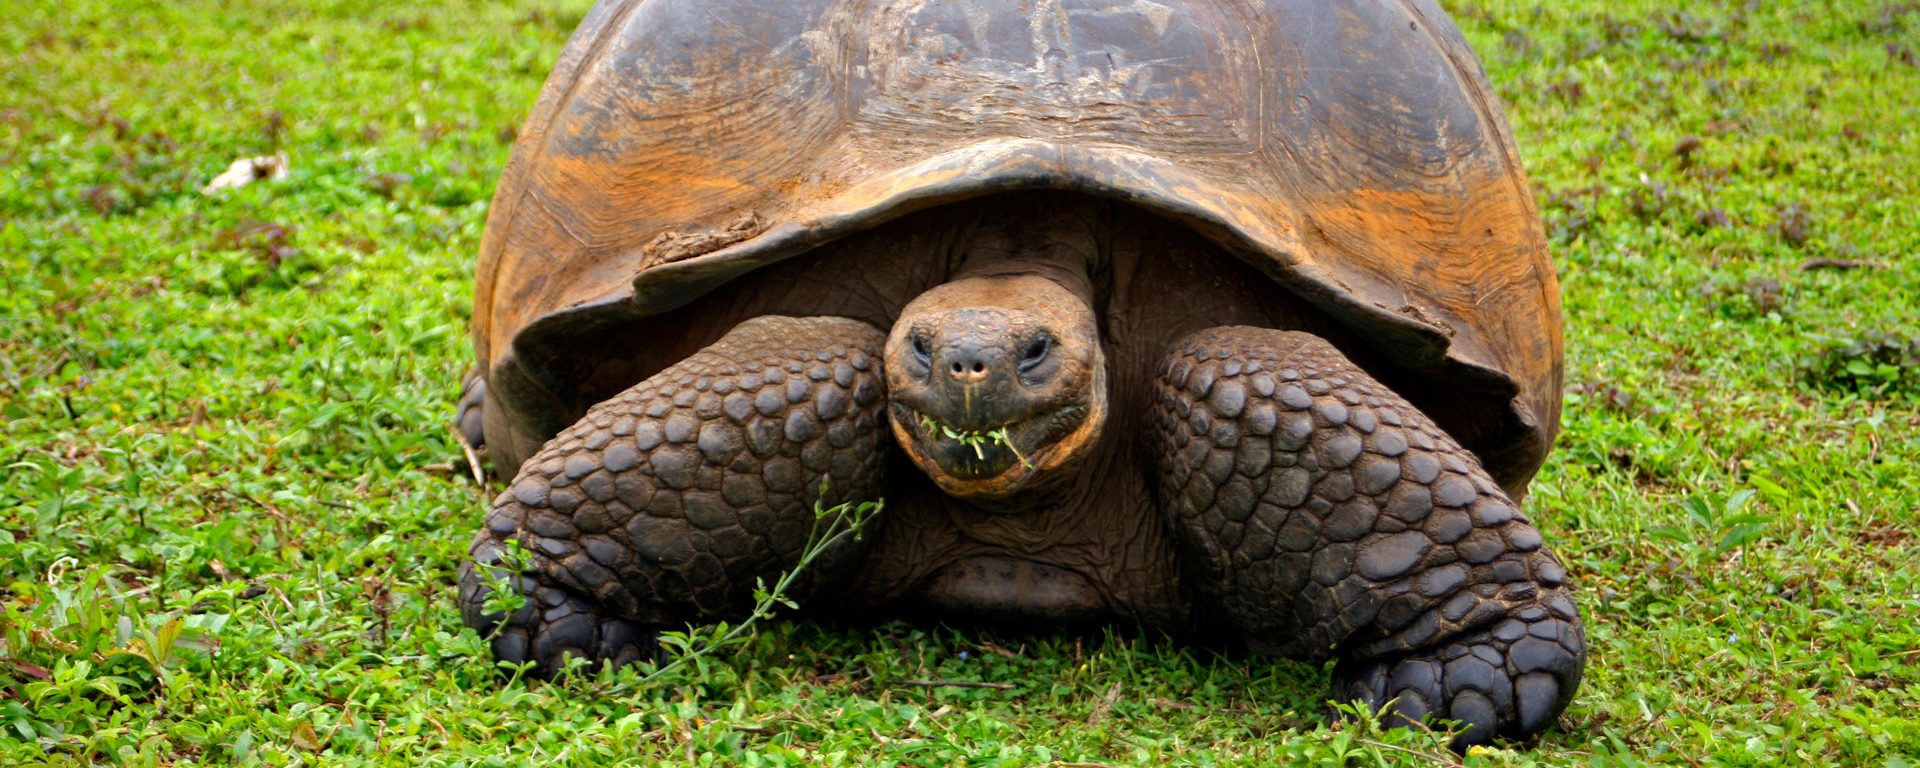 The Galapagos Tortoise in the highlands of Santa Cruz Island, Galapagos, Ecuador